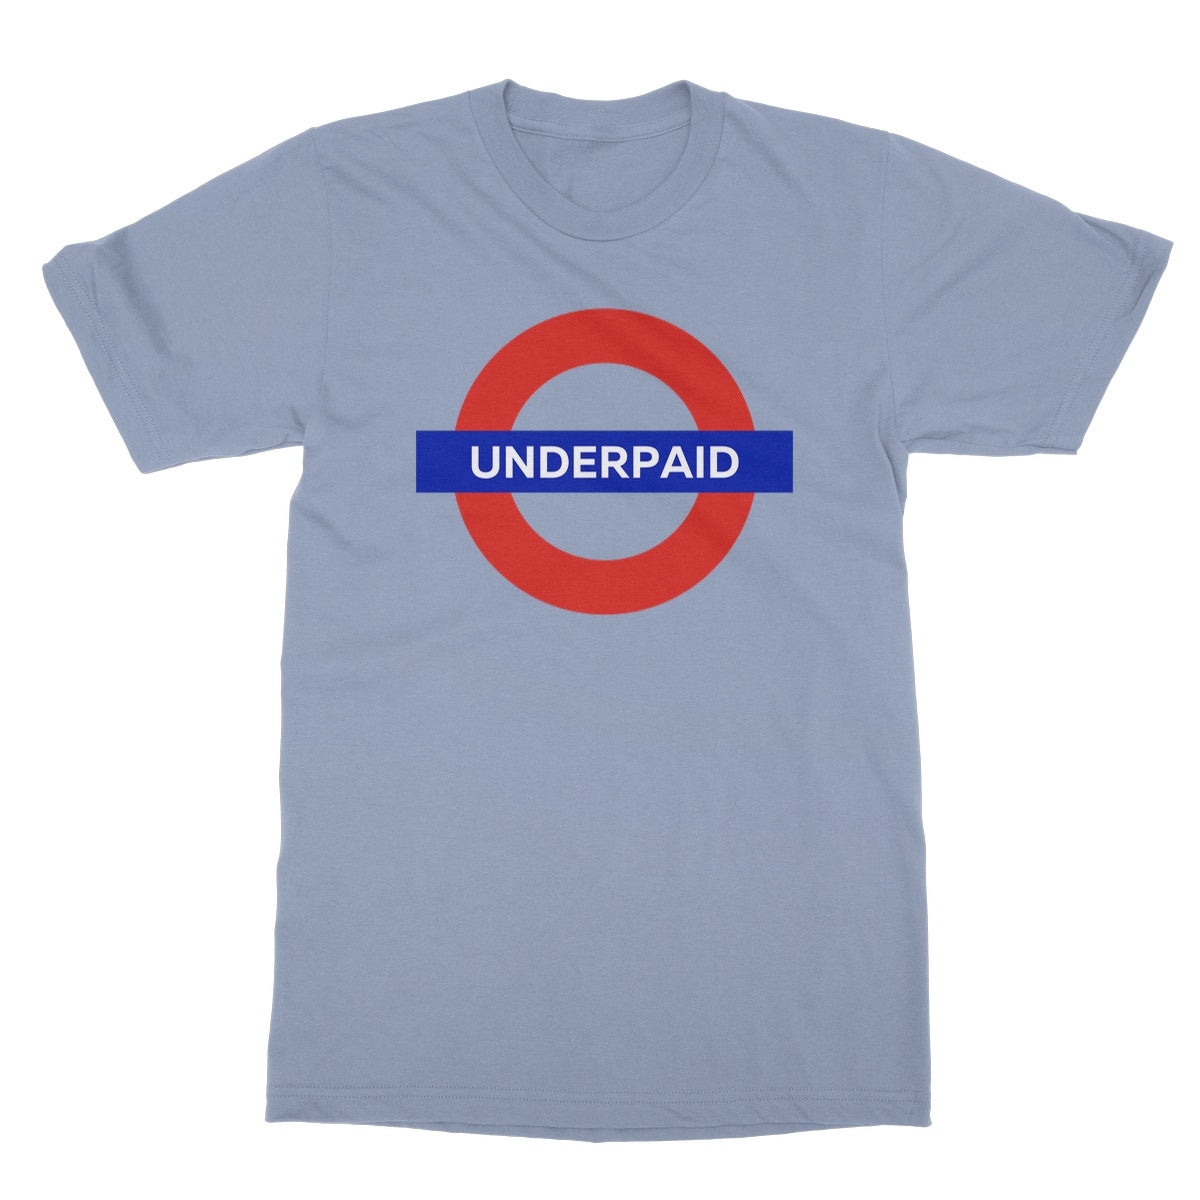 underpaid t shirt blue